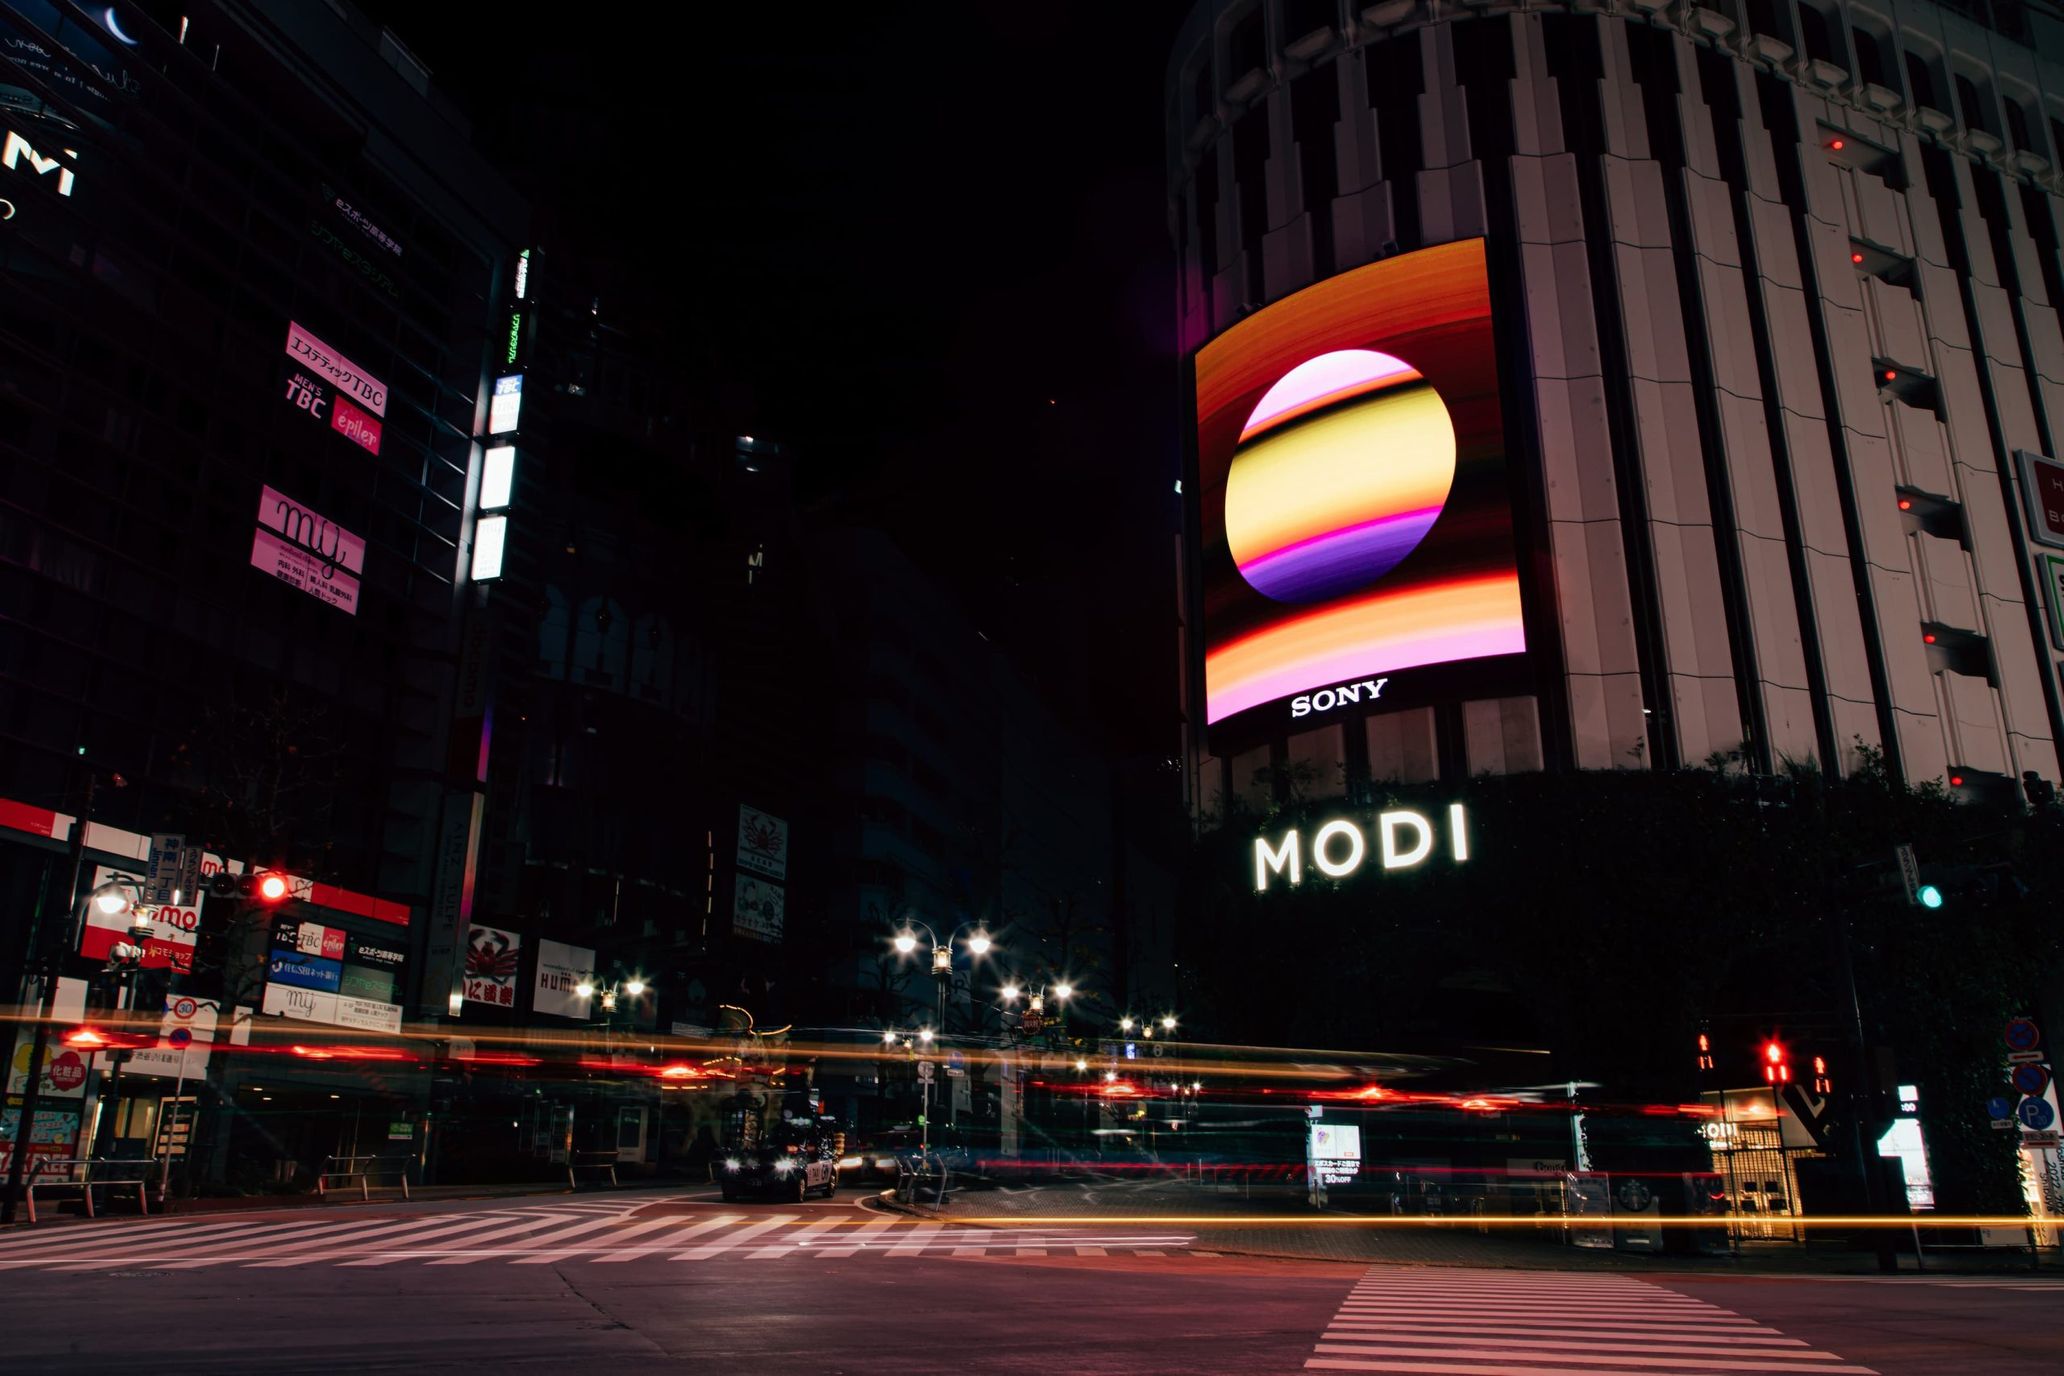 「MODI」の街頭ビジョンの映像